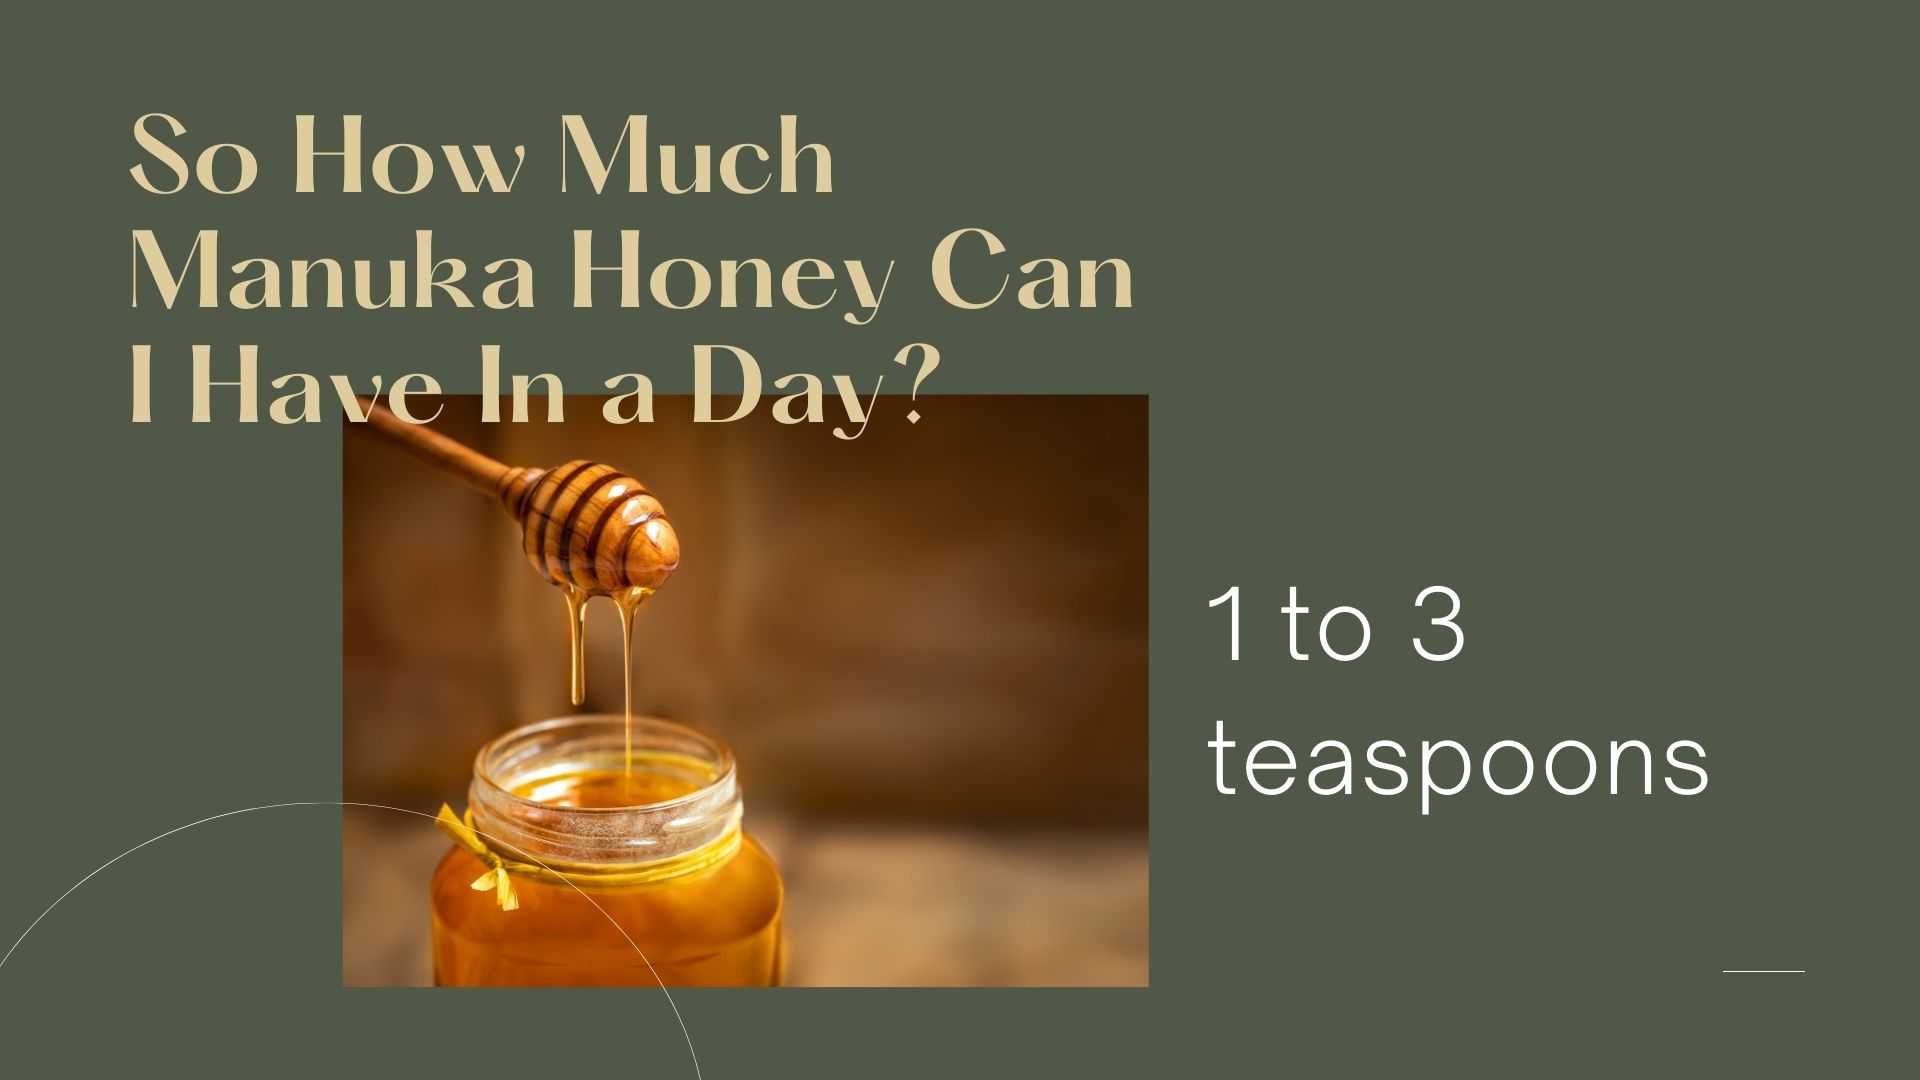 manuka honey in a day